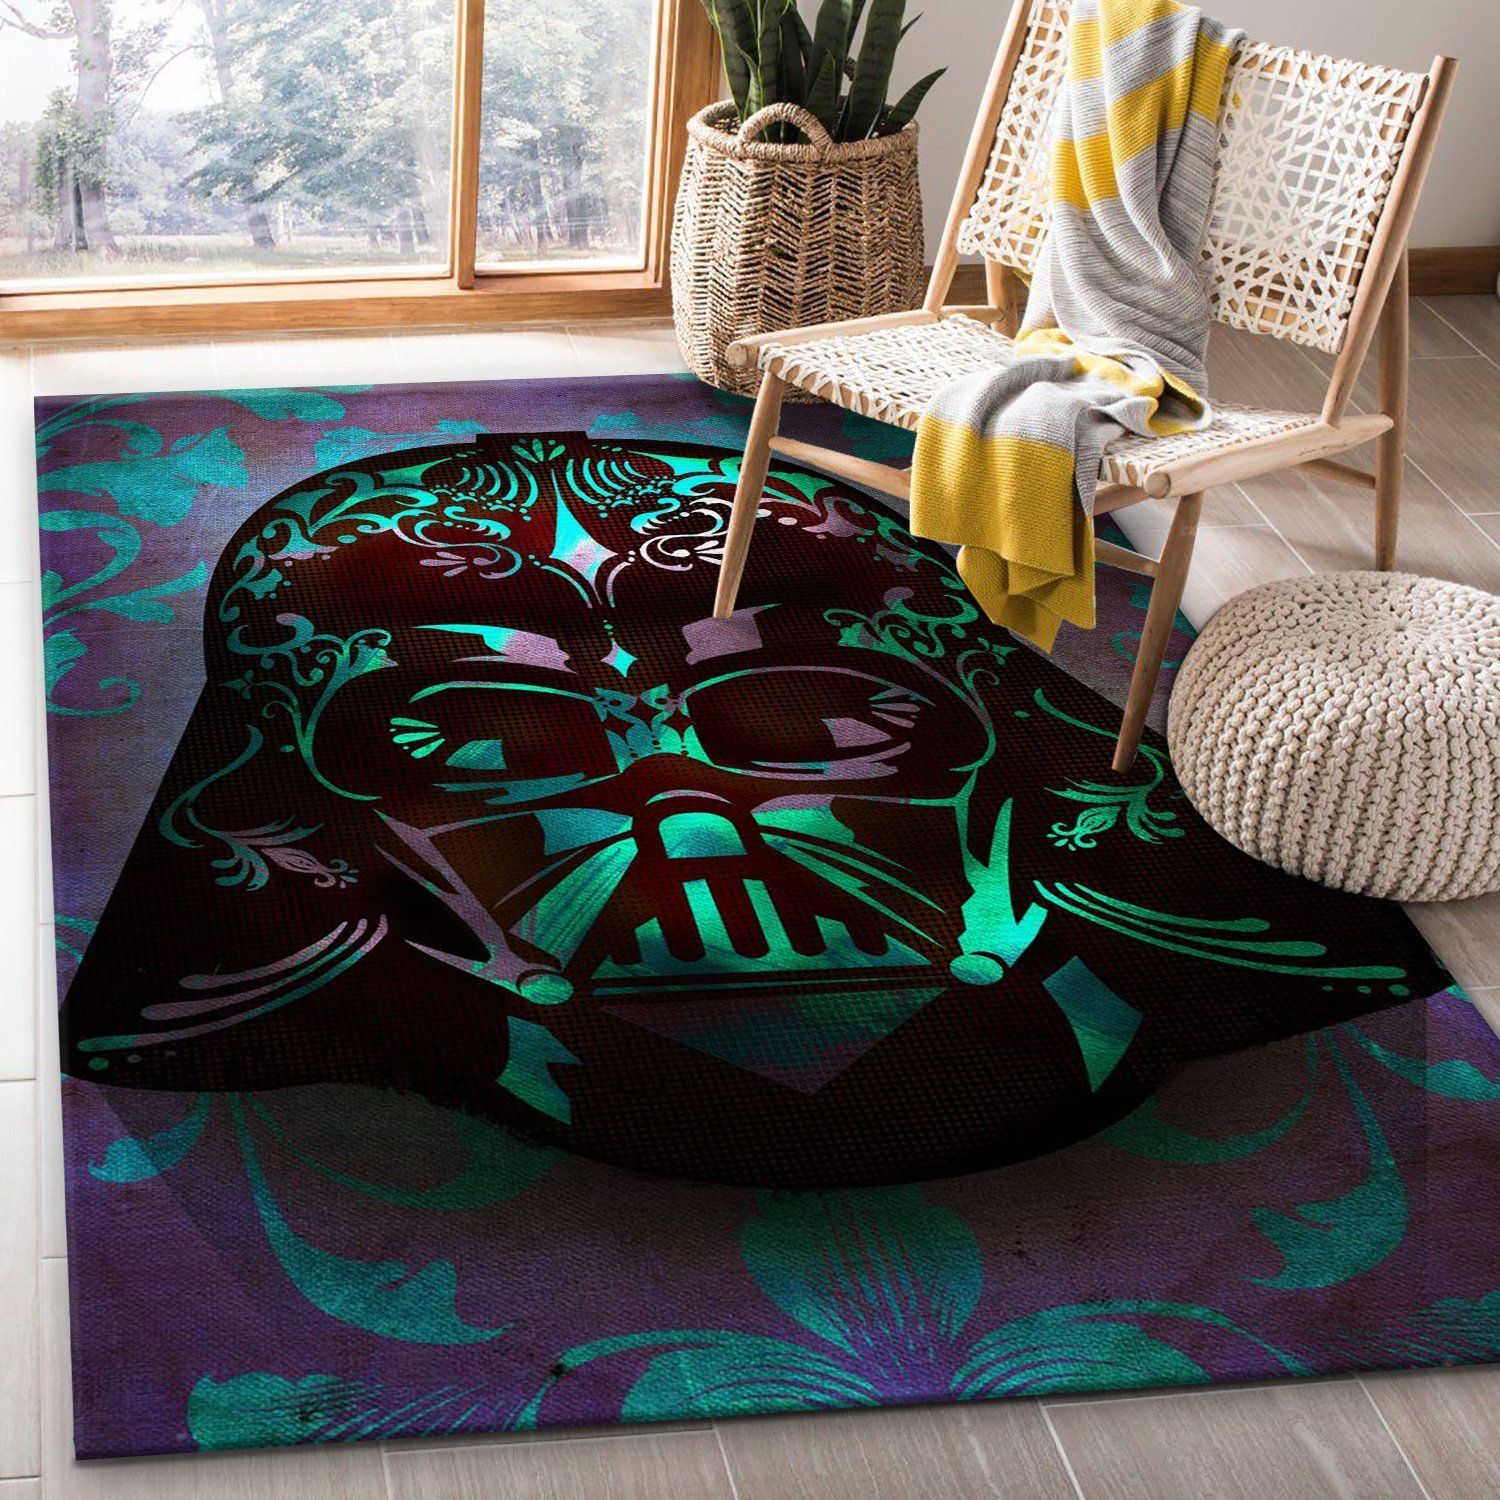 Vader Fluid Rug Star Wars Visions Of Darth Vader Rug Home Decor Floor Decor - Indoor Outdoor Rugs 1